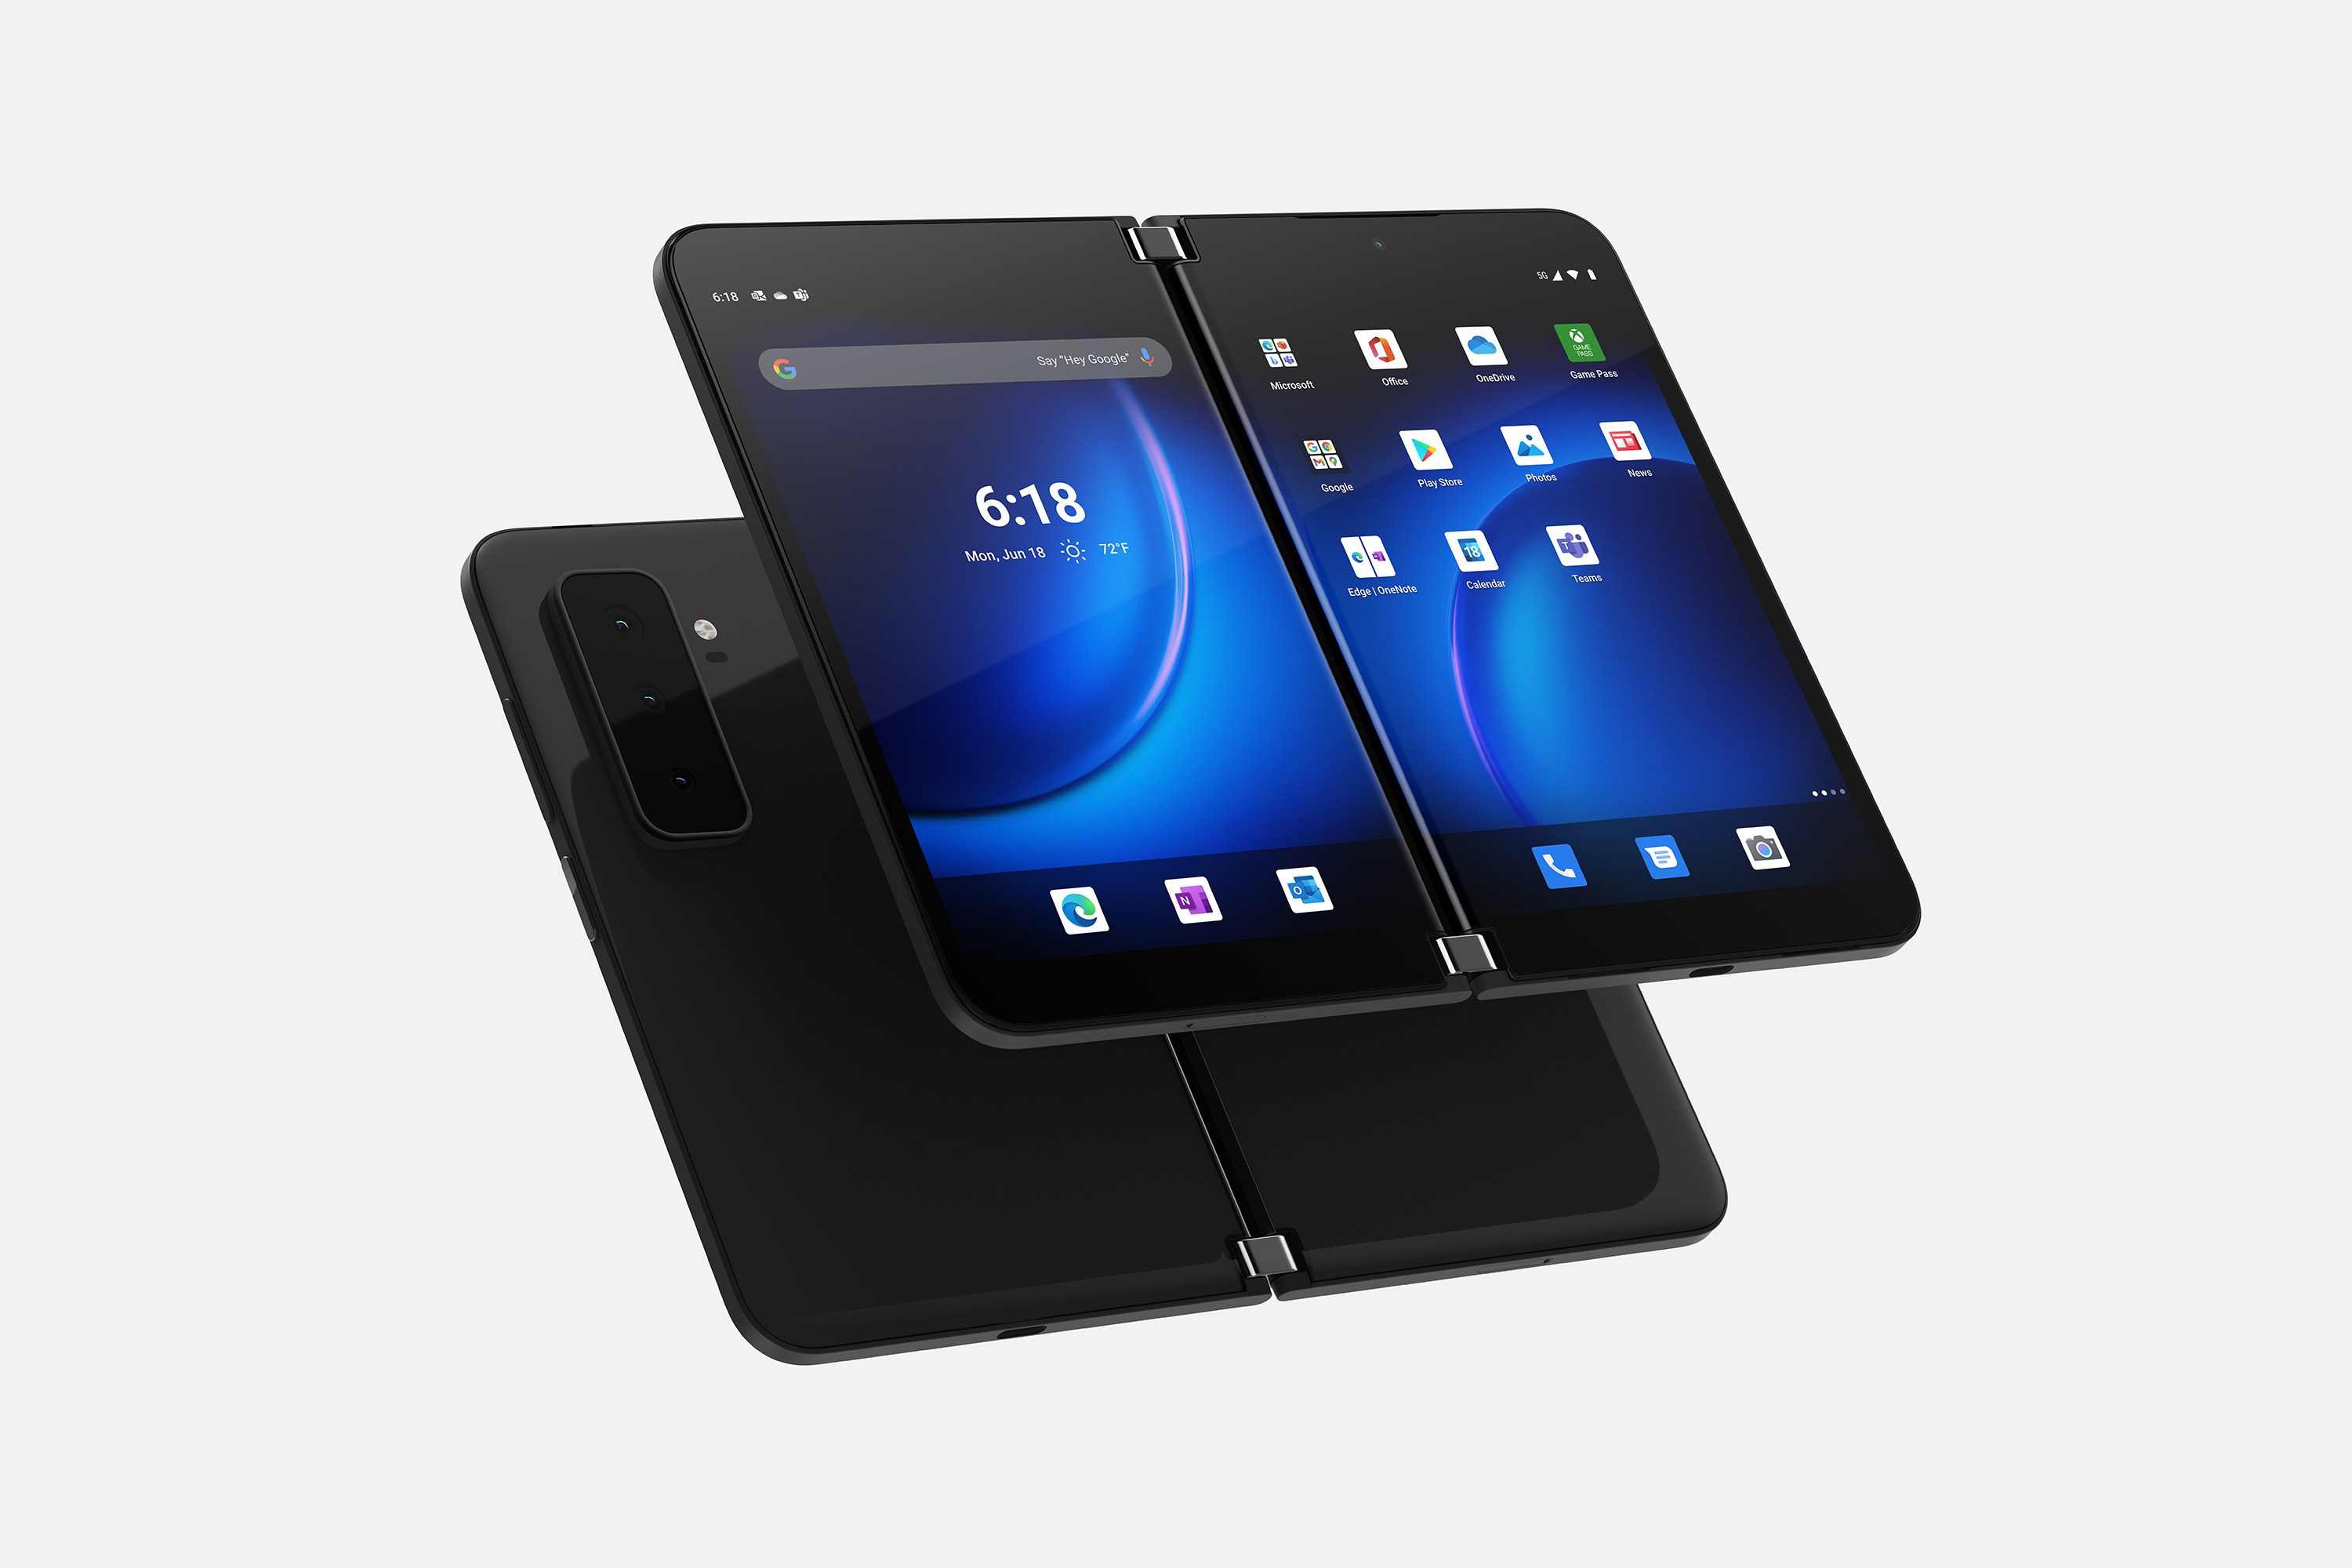 Представлений складаний смартфон Microsoft Surface Duo 2 - Snapdragon 888, Android 11 і два екрани OLED за $ 1 500